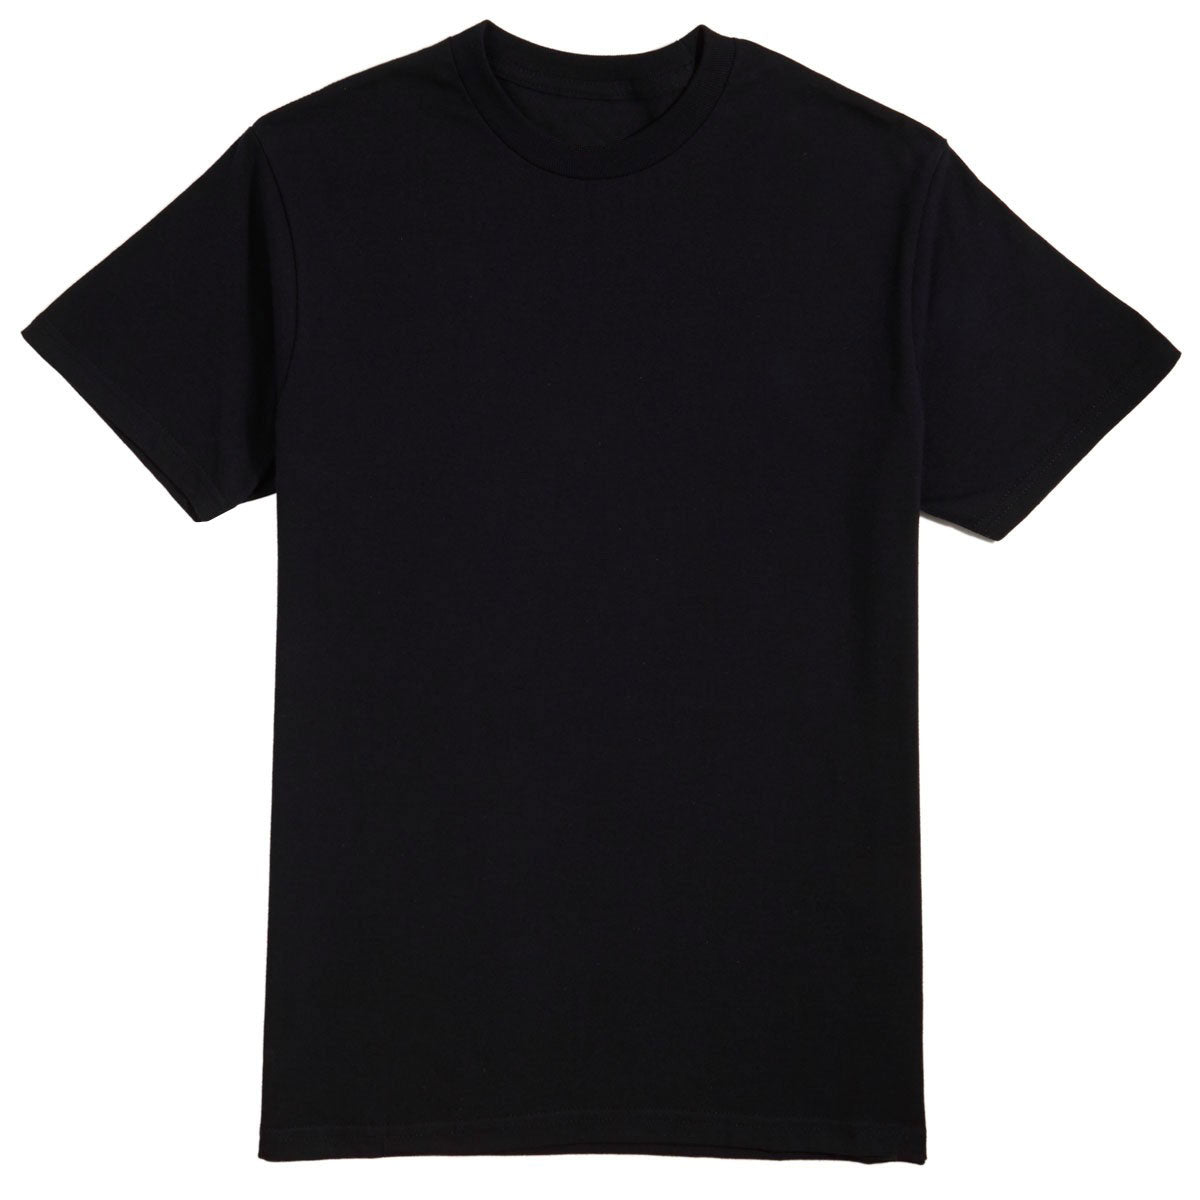 Converse Flash Sheet T-Shirt - Black - MD image 1